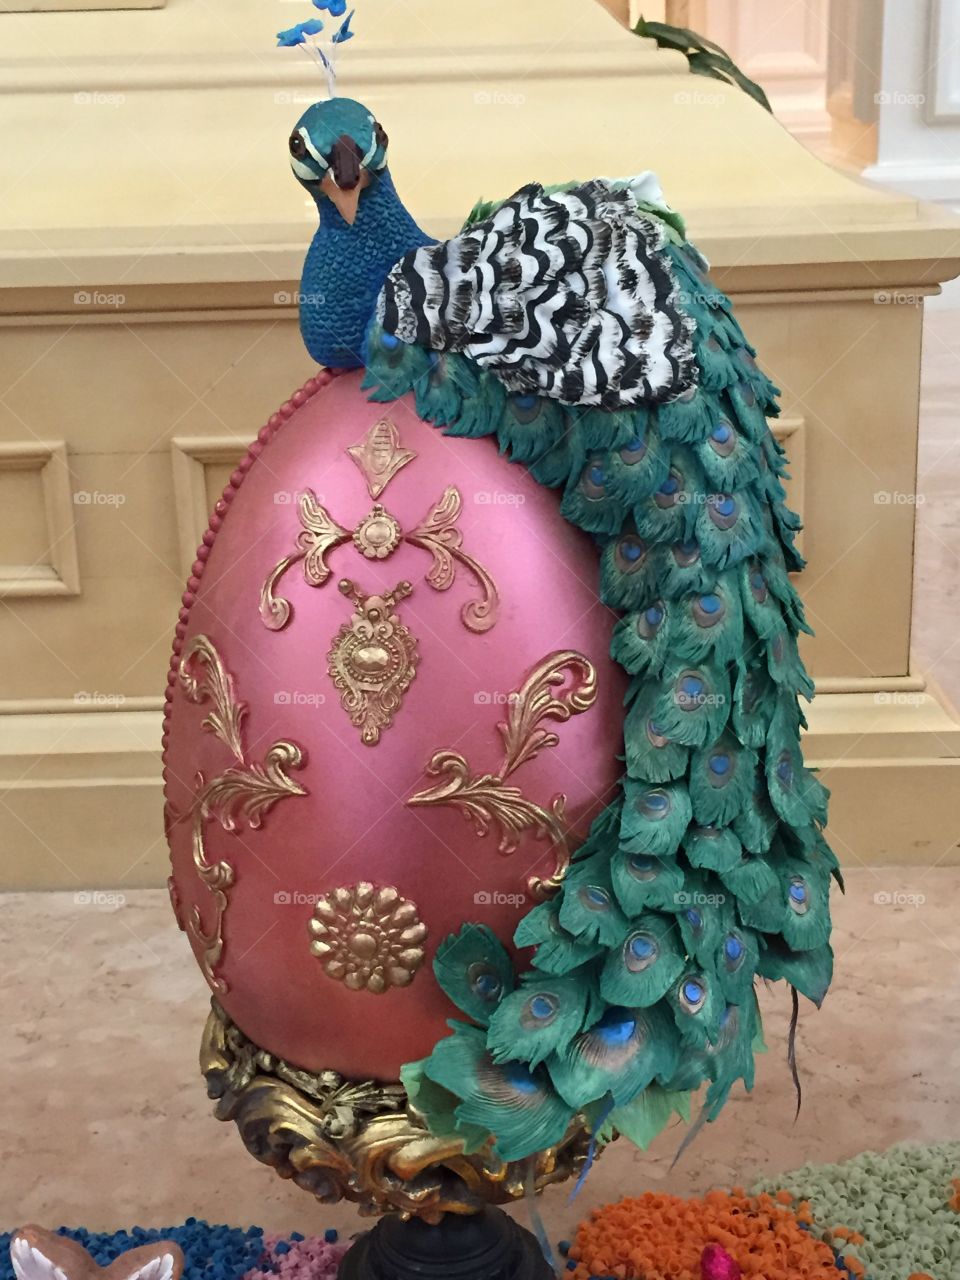 Peacock Easter Egg. Grand Floridian Easter Egg display.